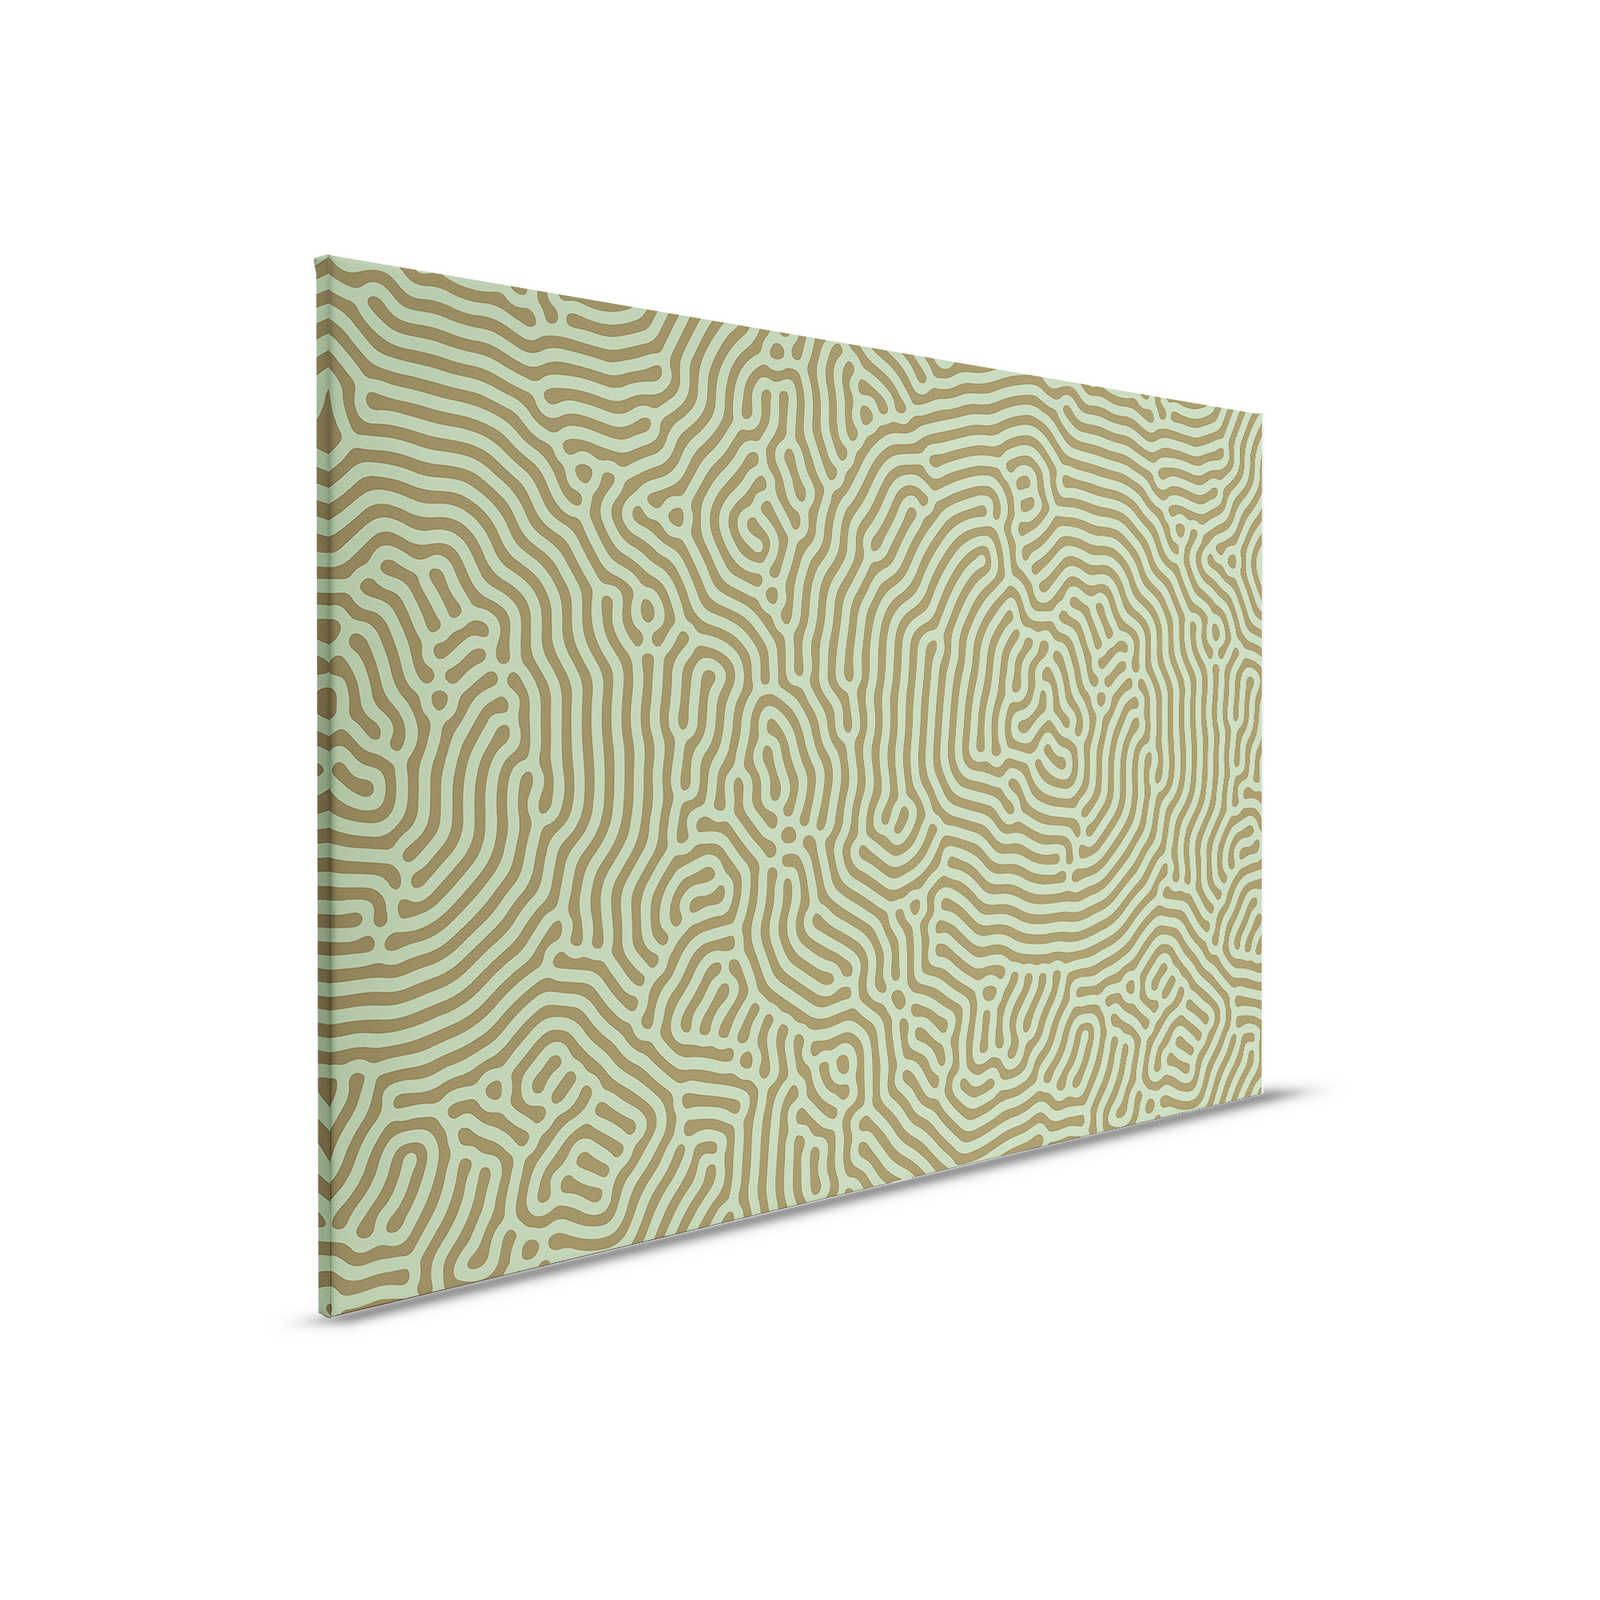         Sahel 1 - Green Canvas painting Labyrinth Pattern Sage Green - 0.90 m x 0.60 m
    